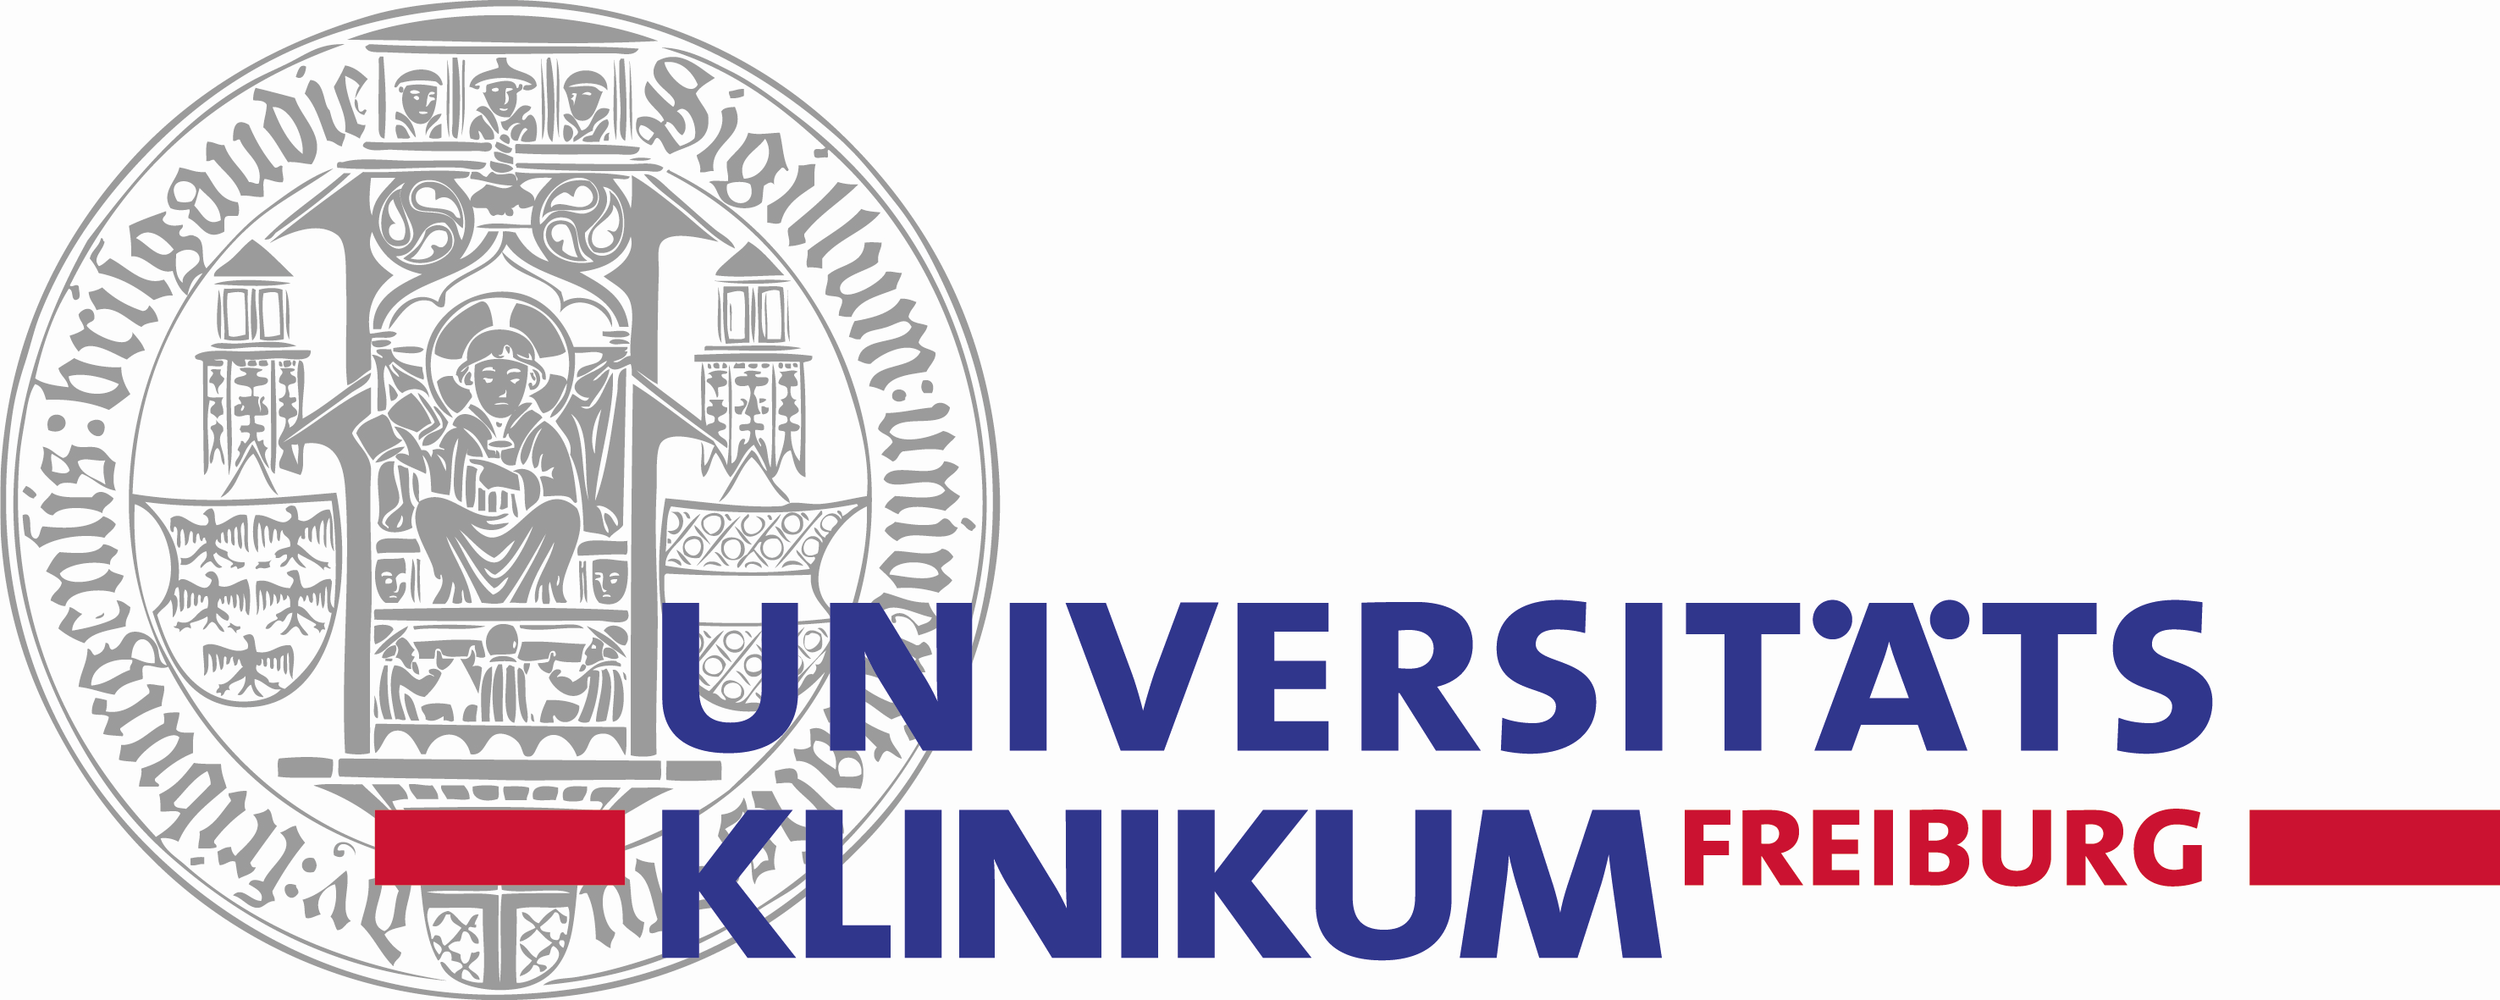 Uni Klinik Freiburg logo.png